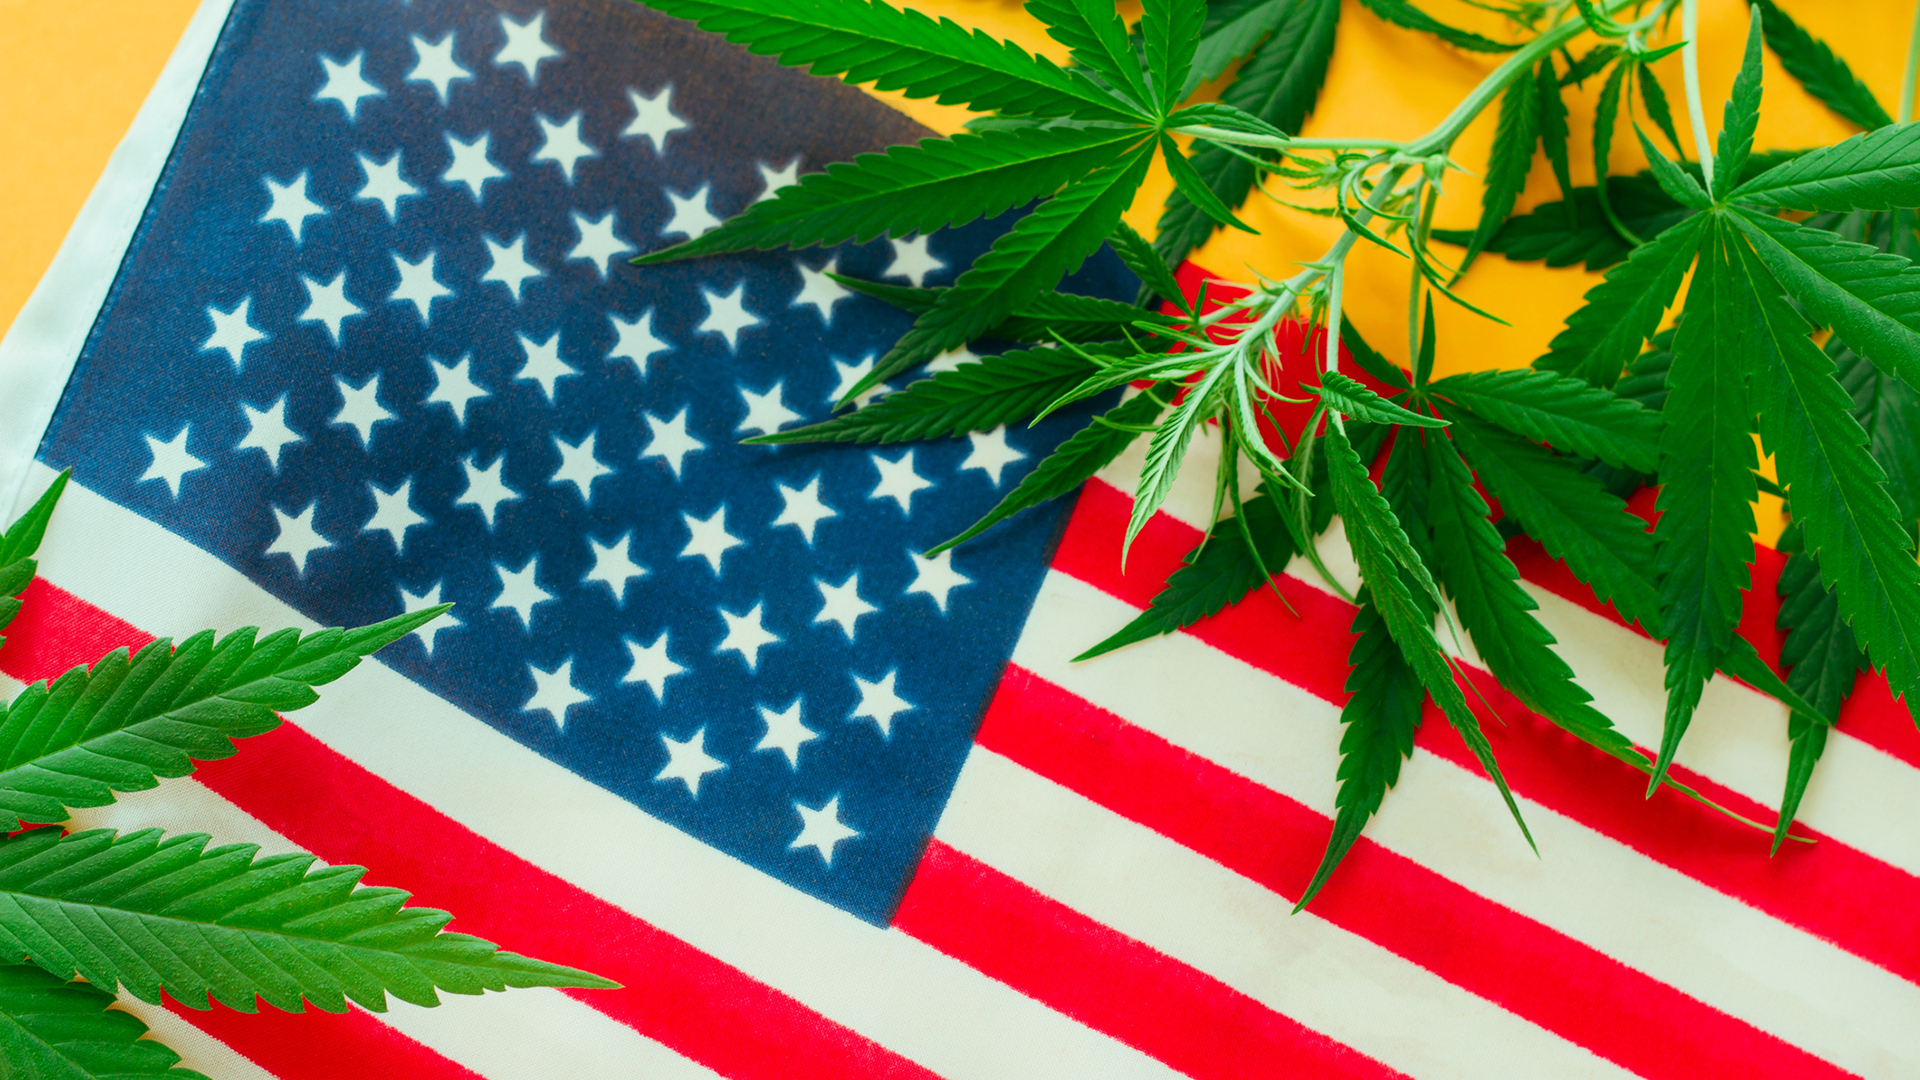 Dana Rohrabacher discusses federal cannabis legalisation nationwide